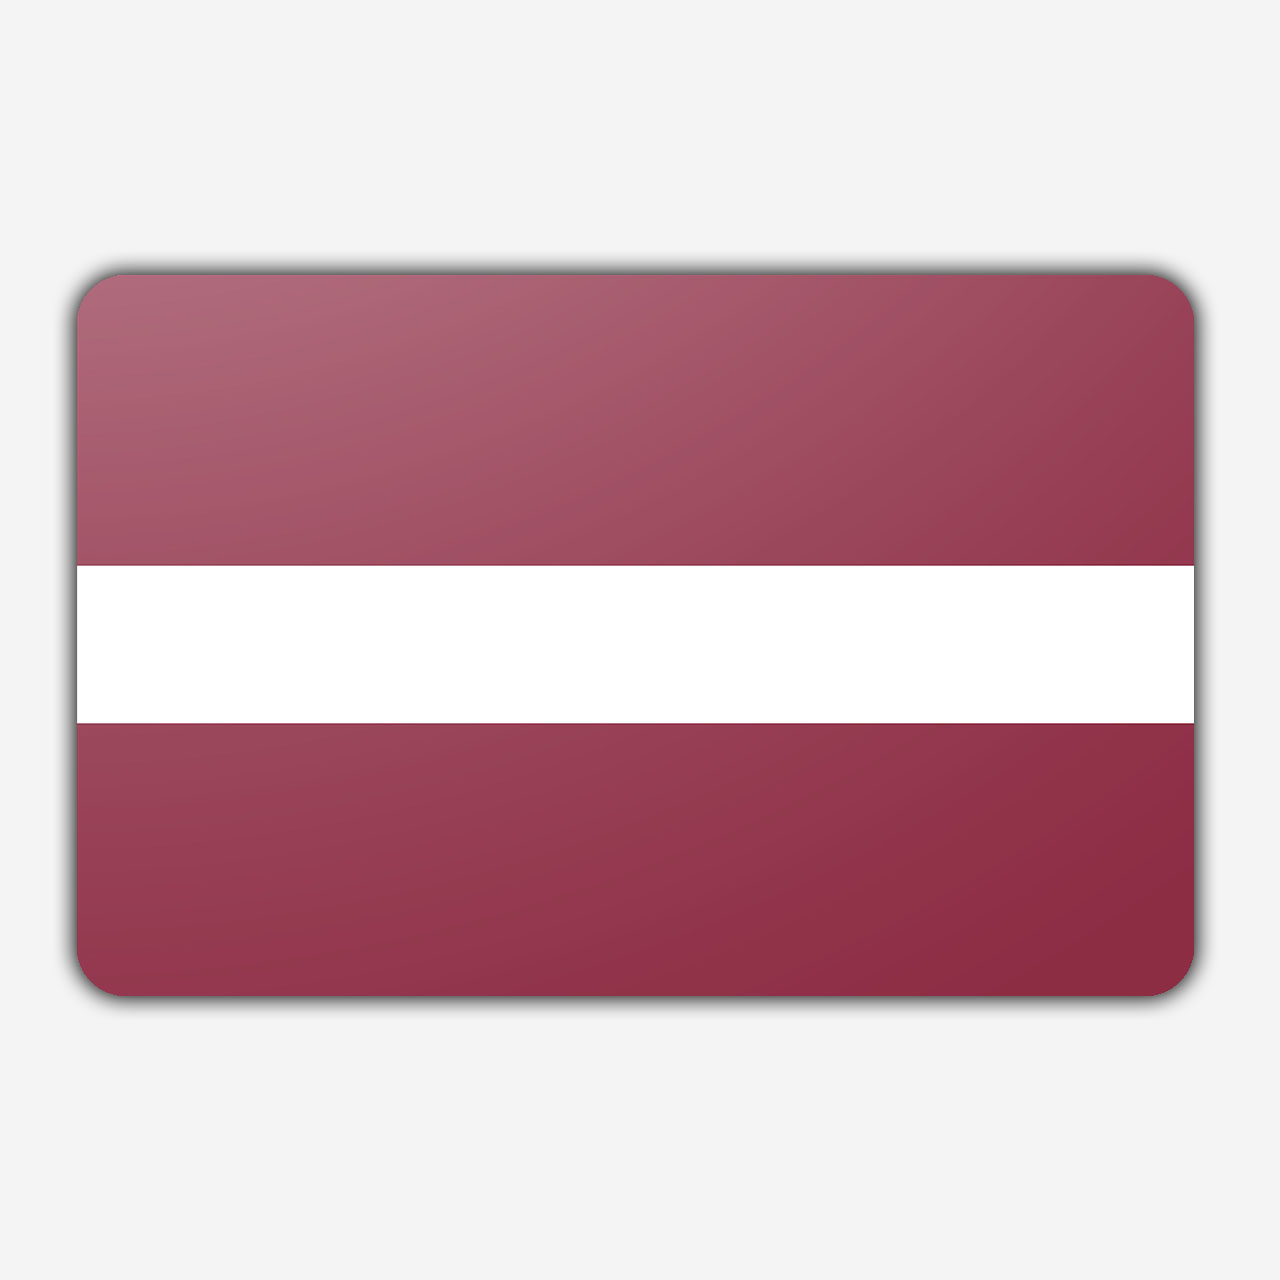 Vlag Letland